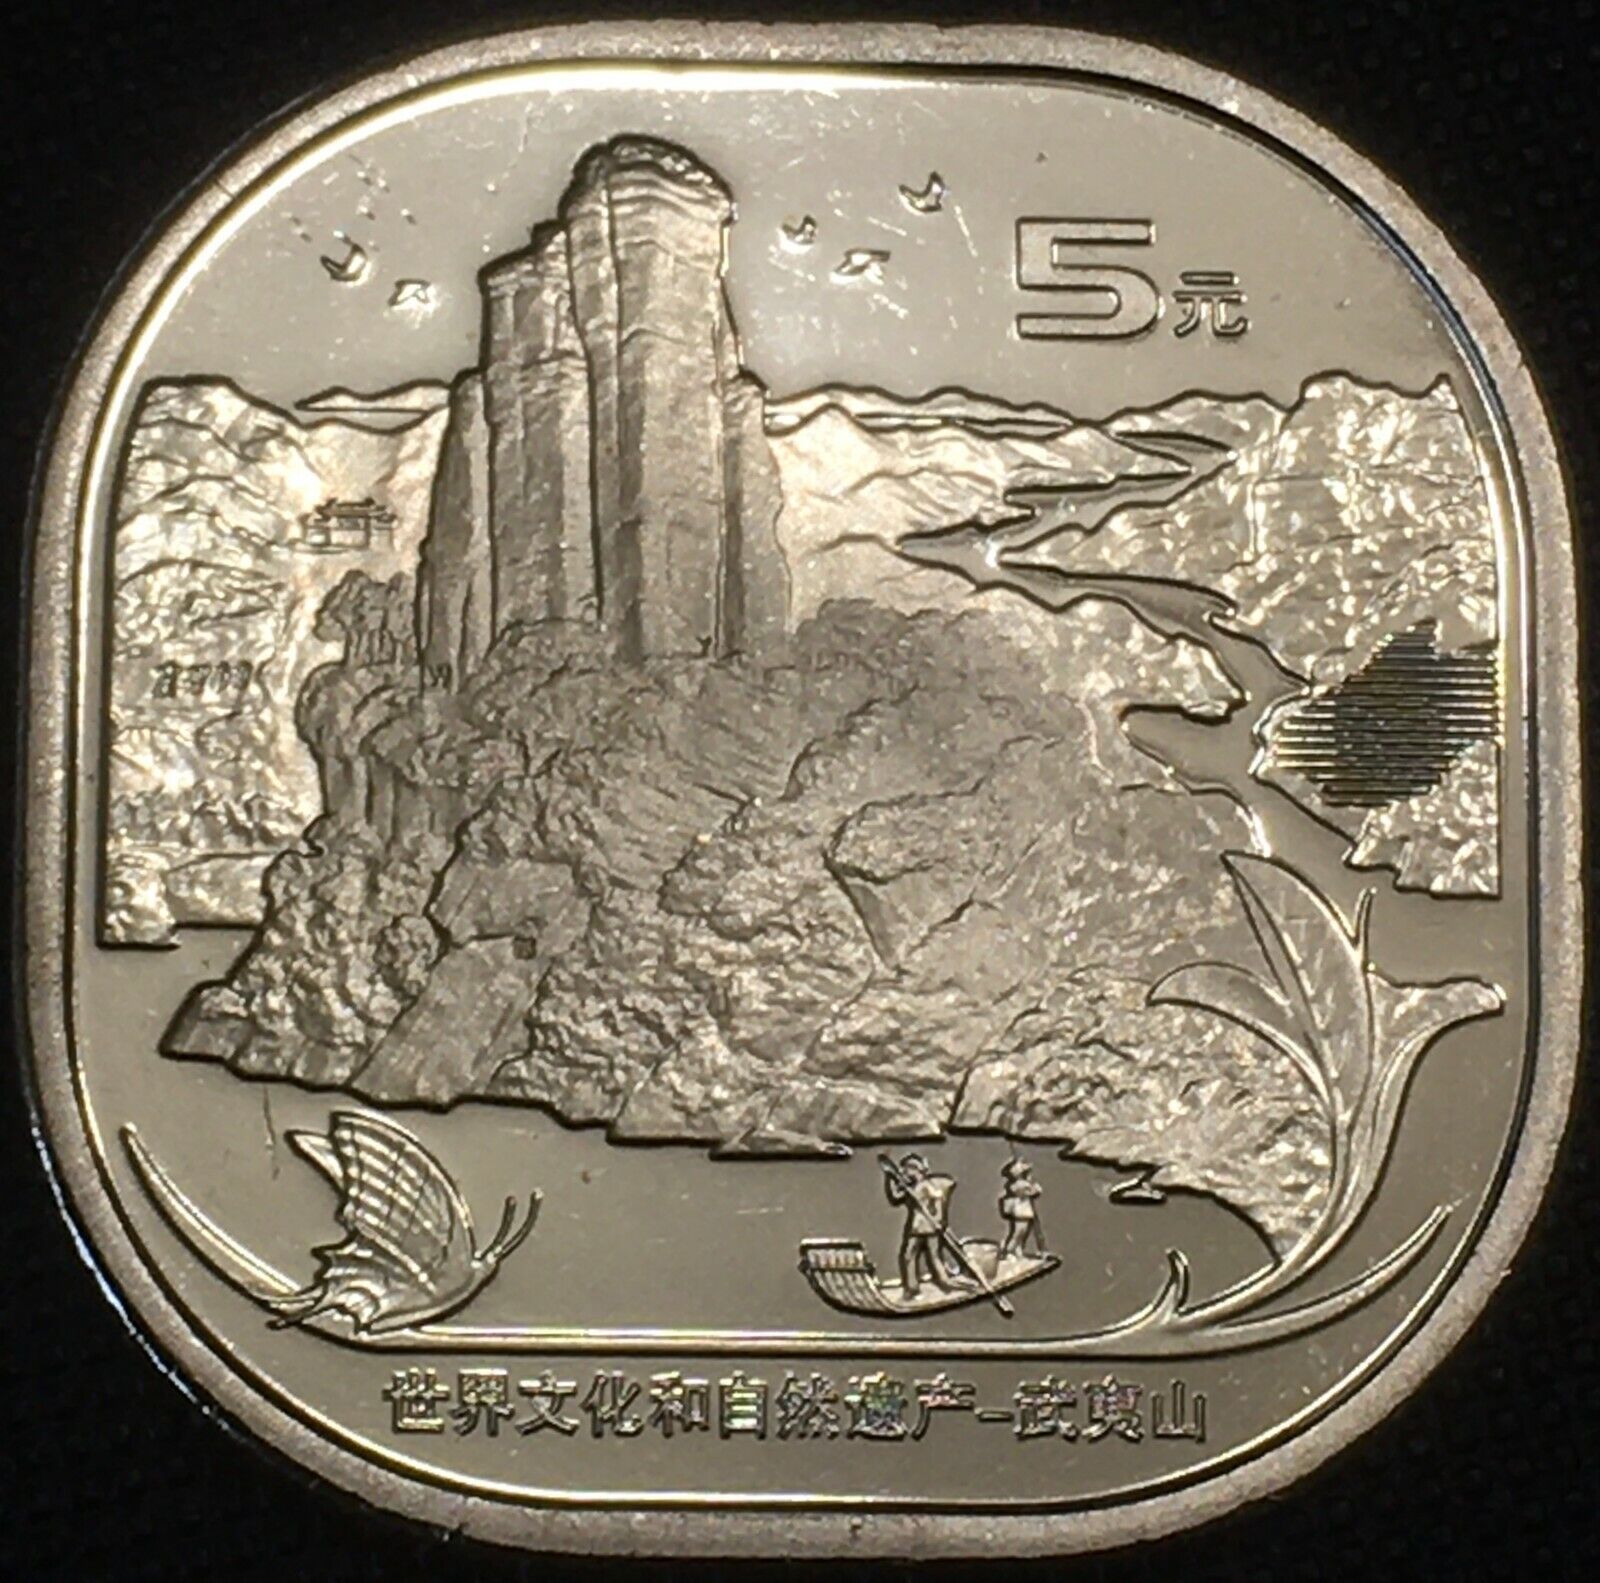 China 2020 Wuyi Mountain 5 Yuan Coin, UNC, 1 Roll, 20 Coins